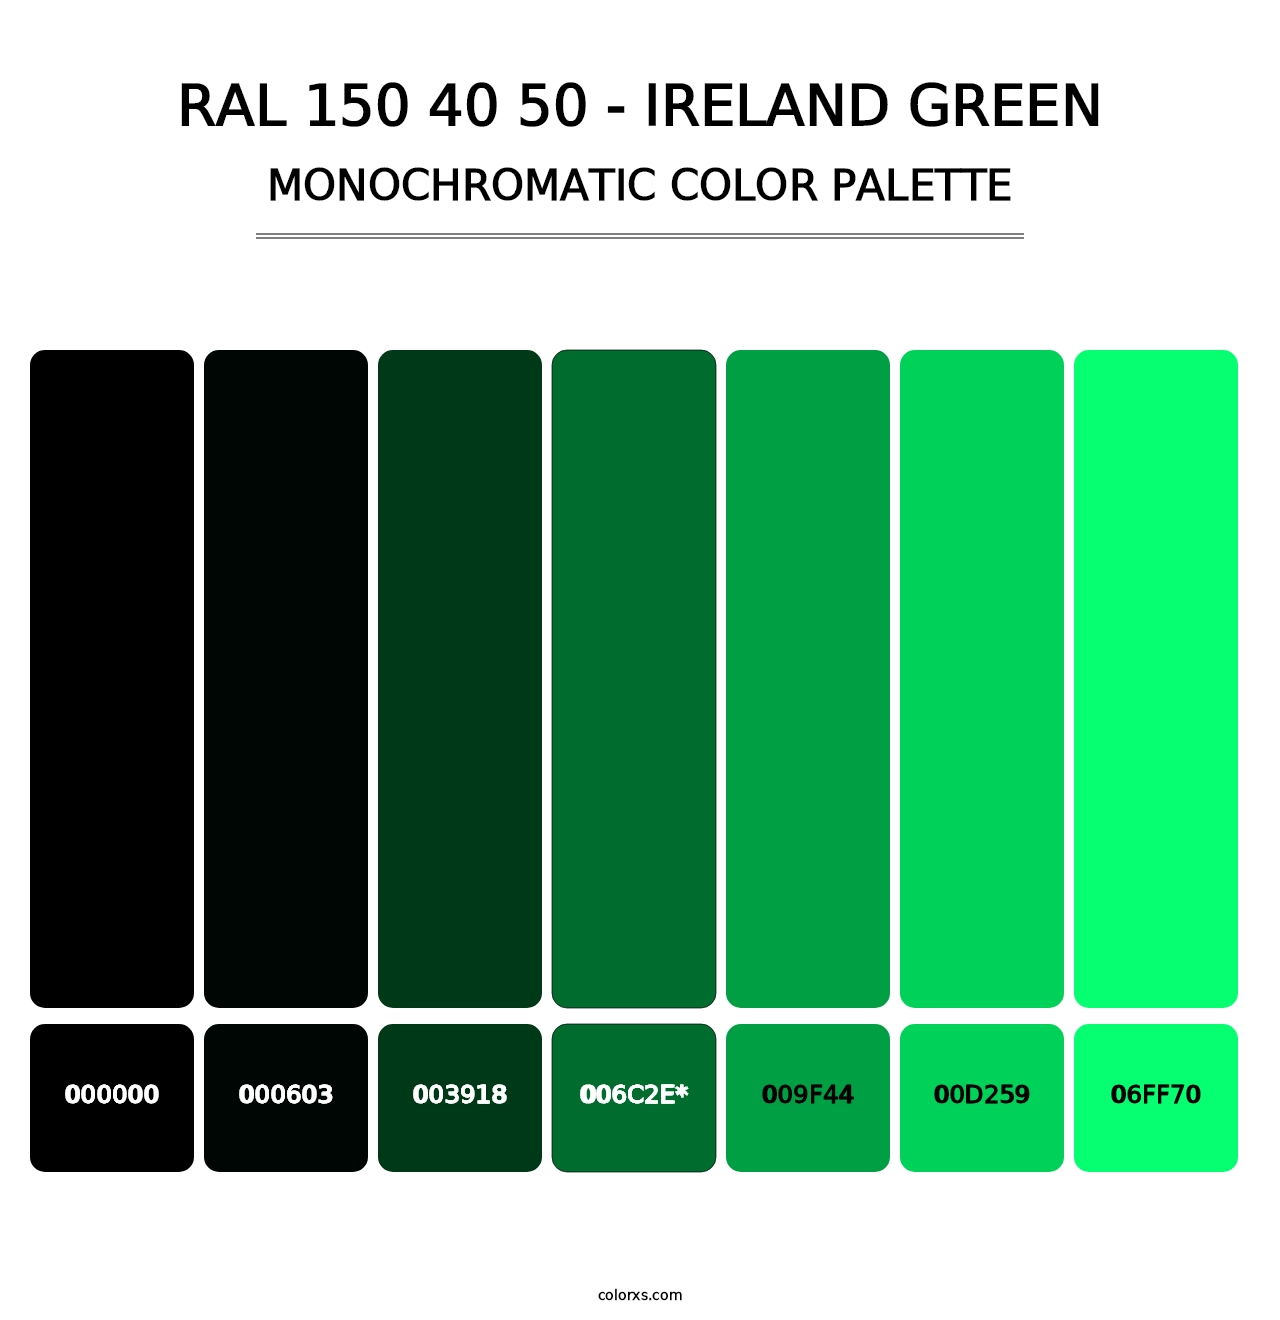 RAL 150 40 50 - Ireland Green - Monochromatic Color Palette